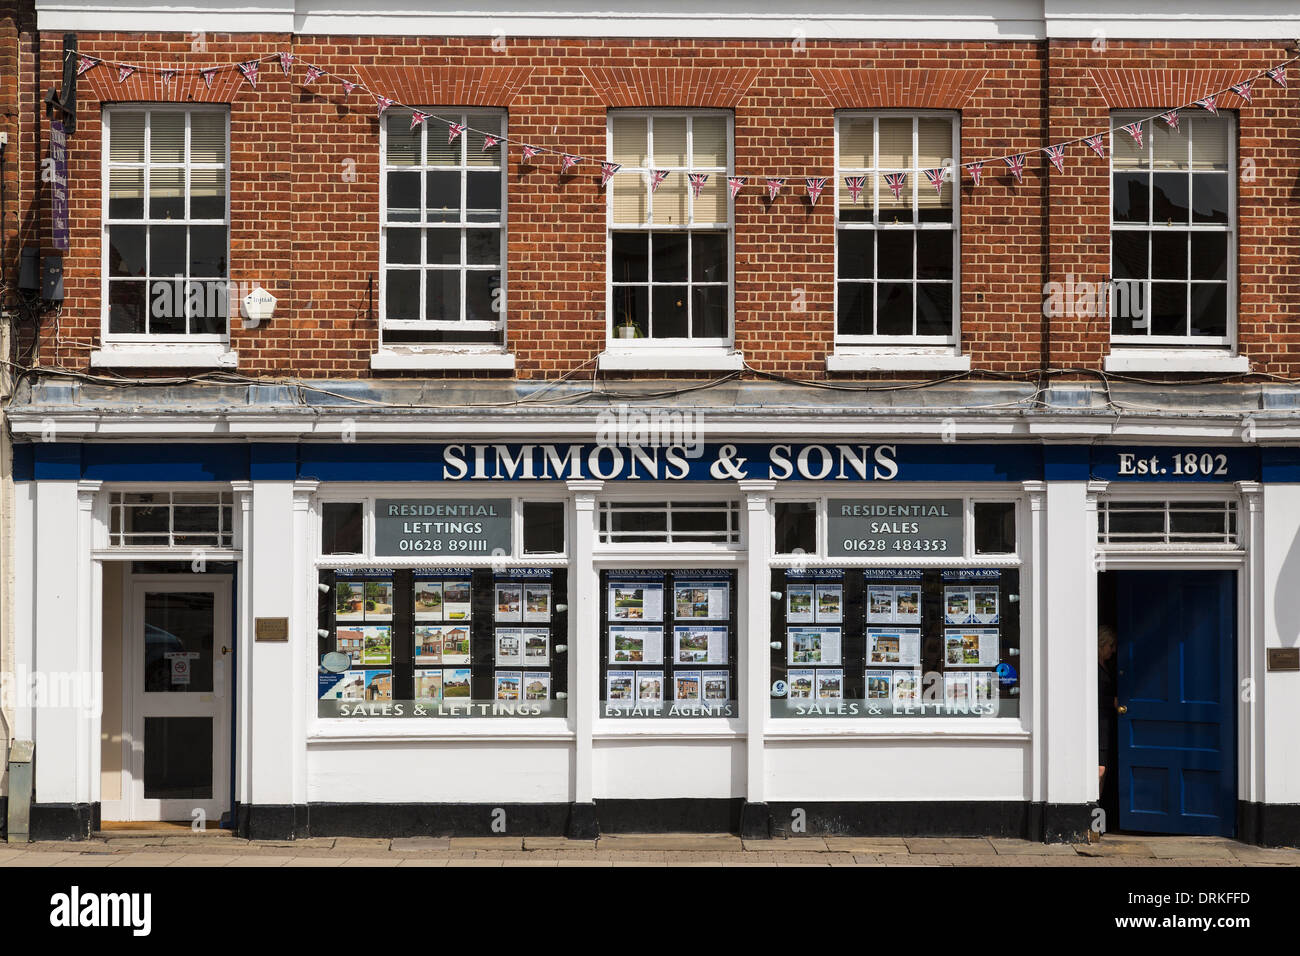 Simmons & Sons estate agents Banque D'Images